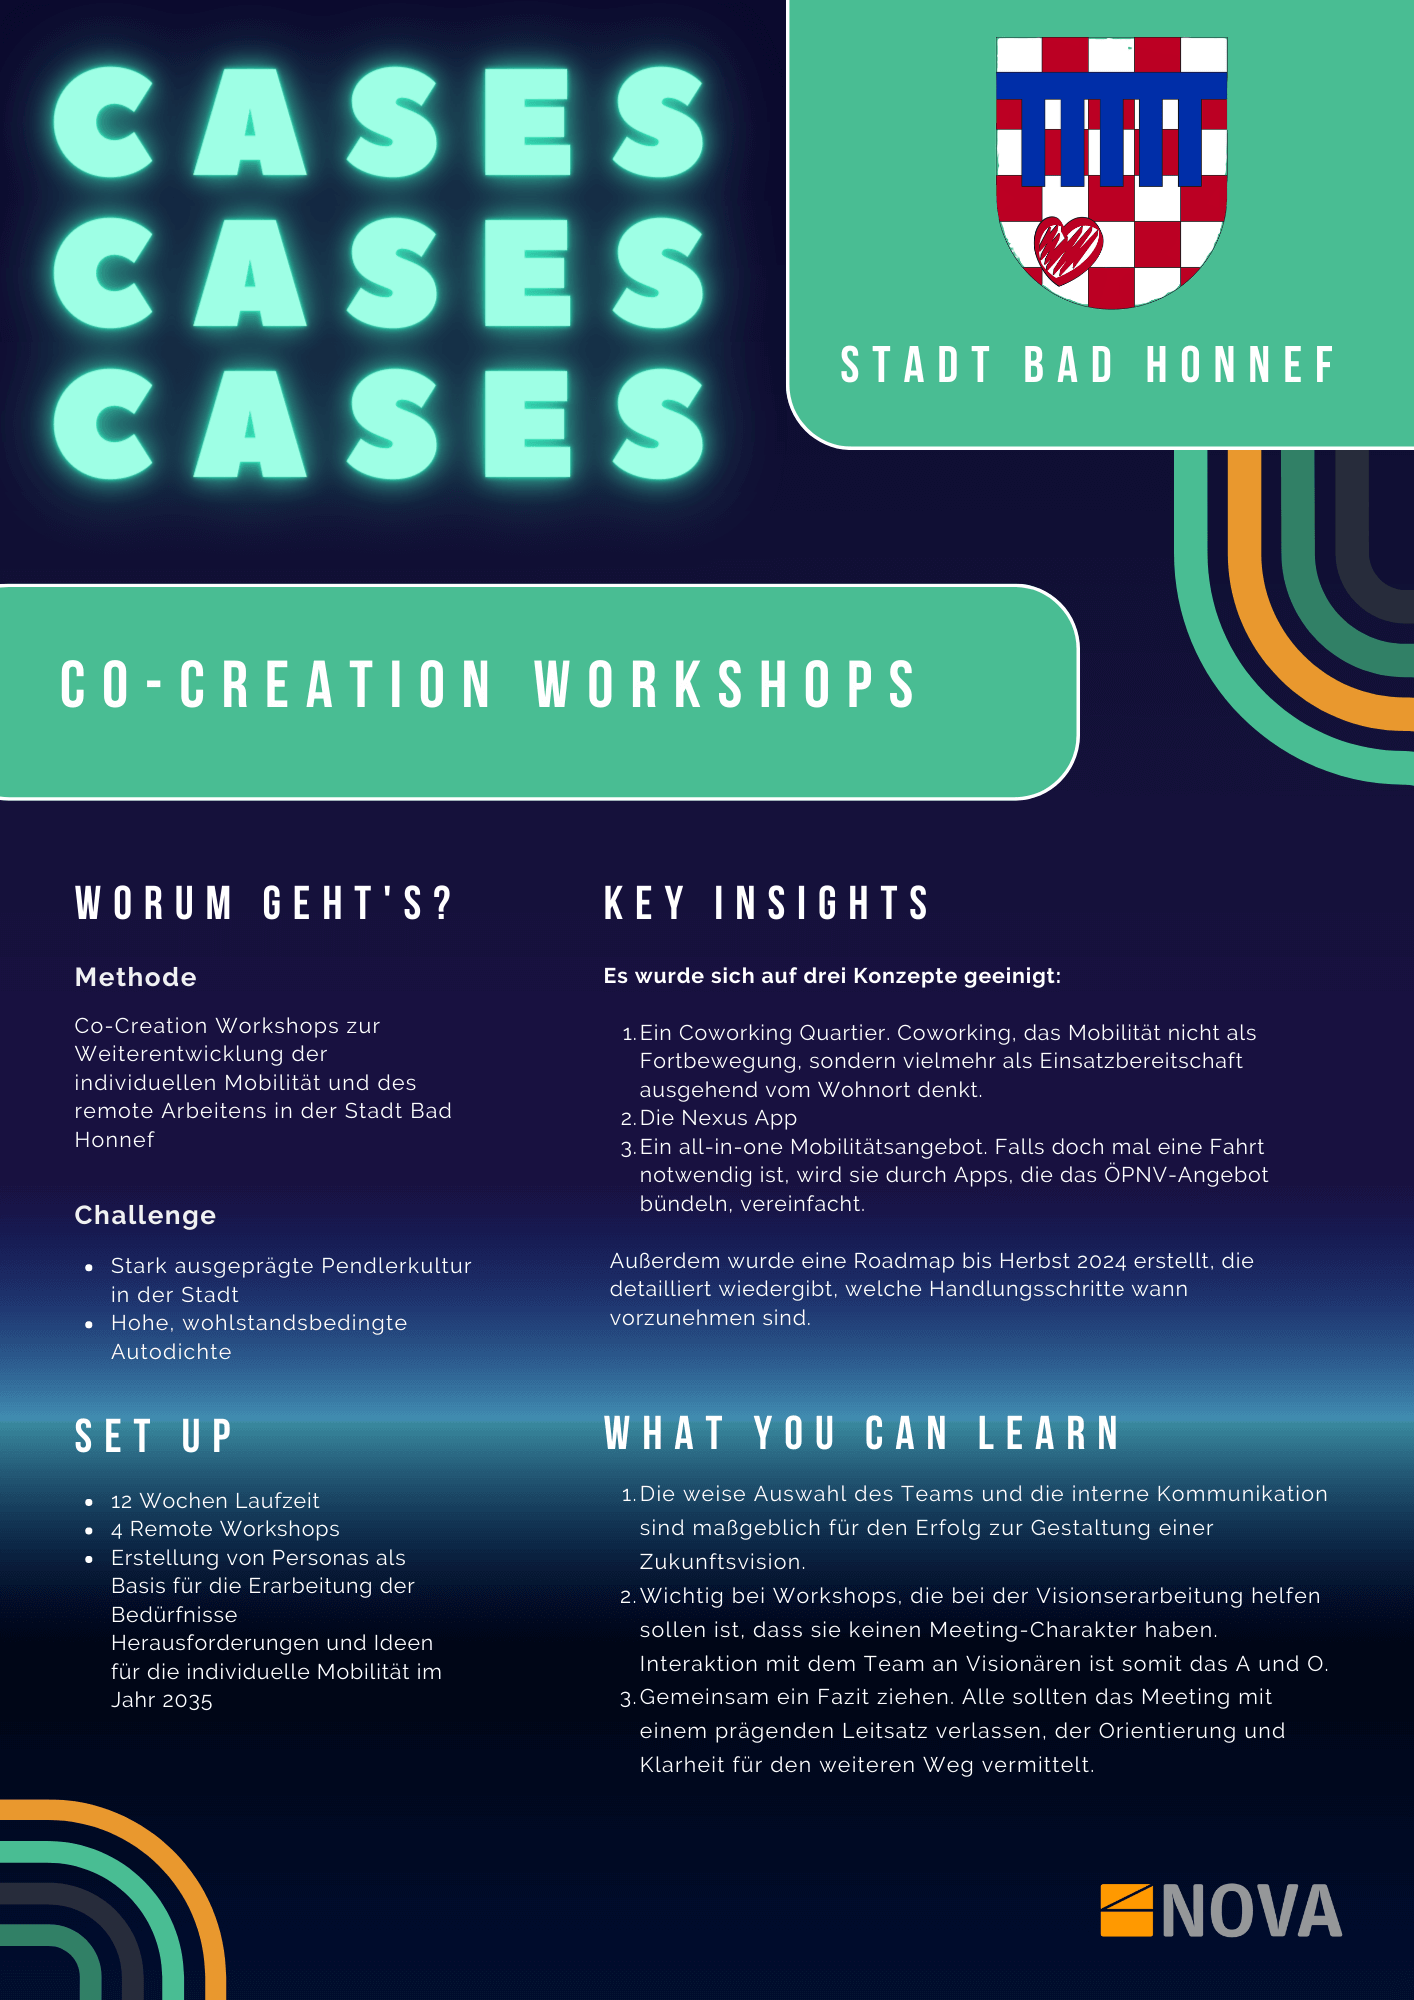 CASES CASES CASES (8)